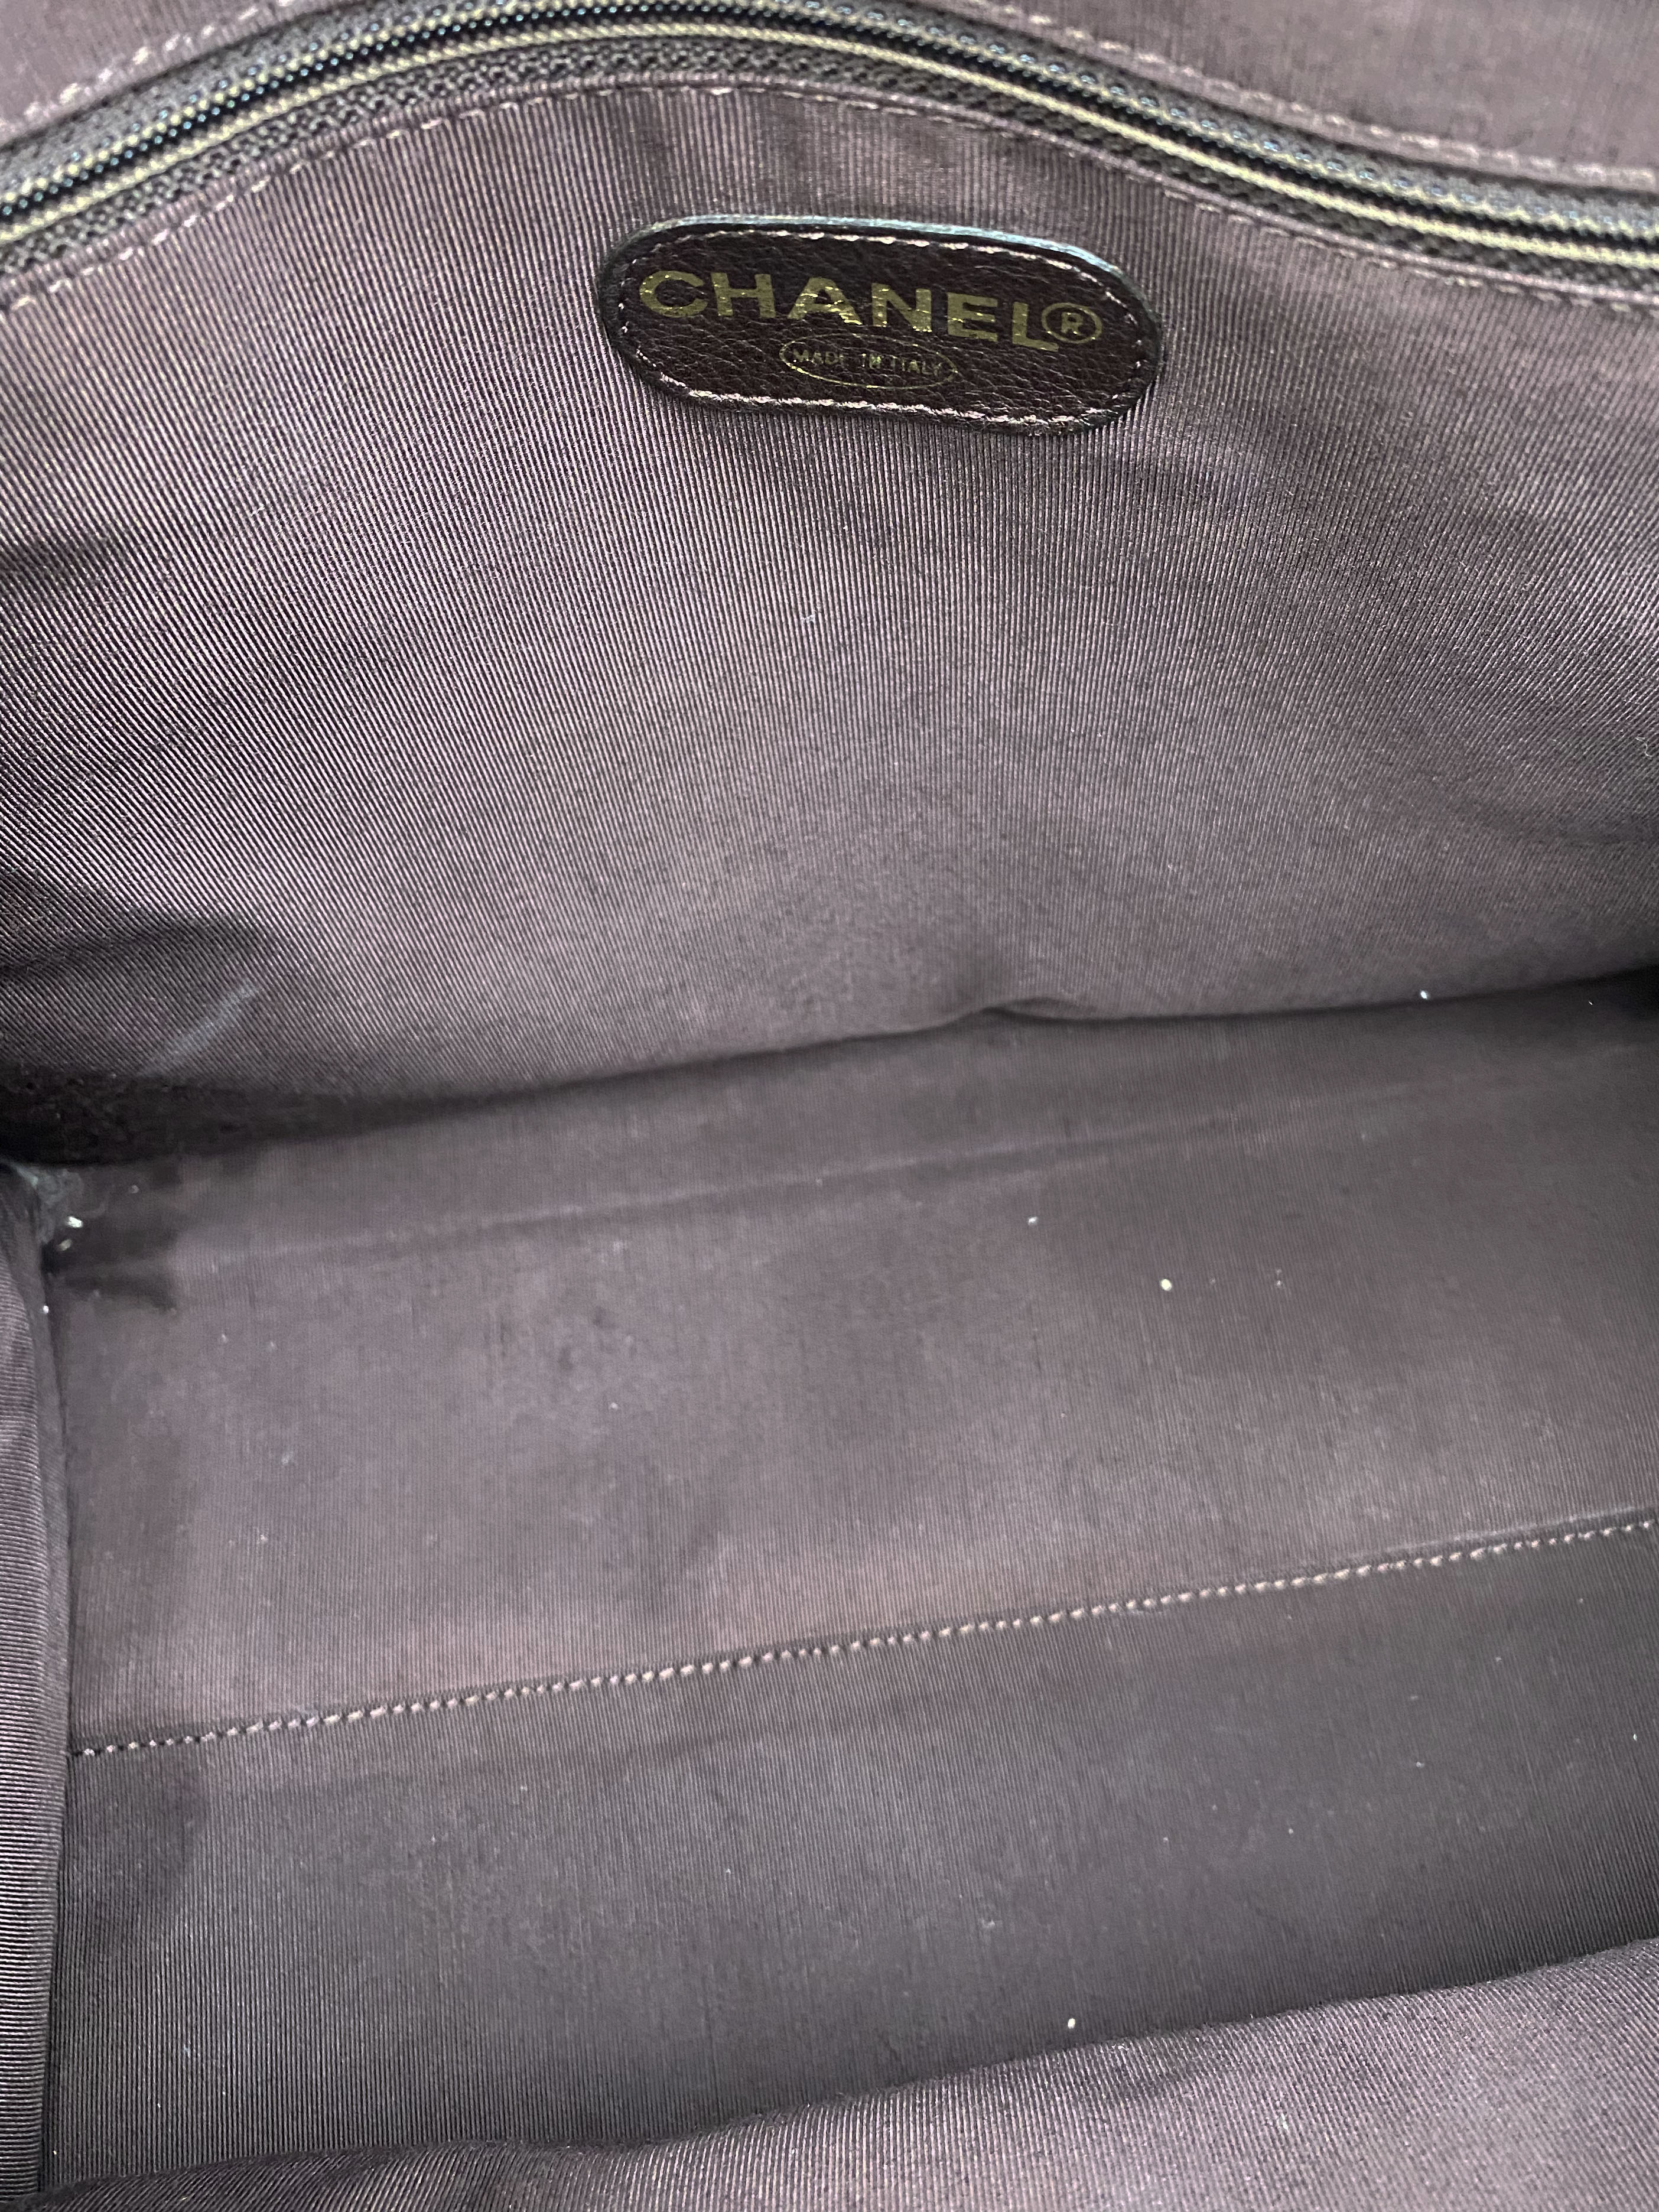 Chanel Vintage Tan Brown Suede Bag